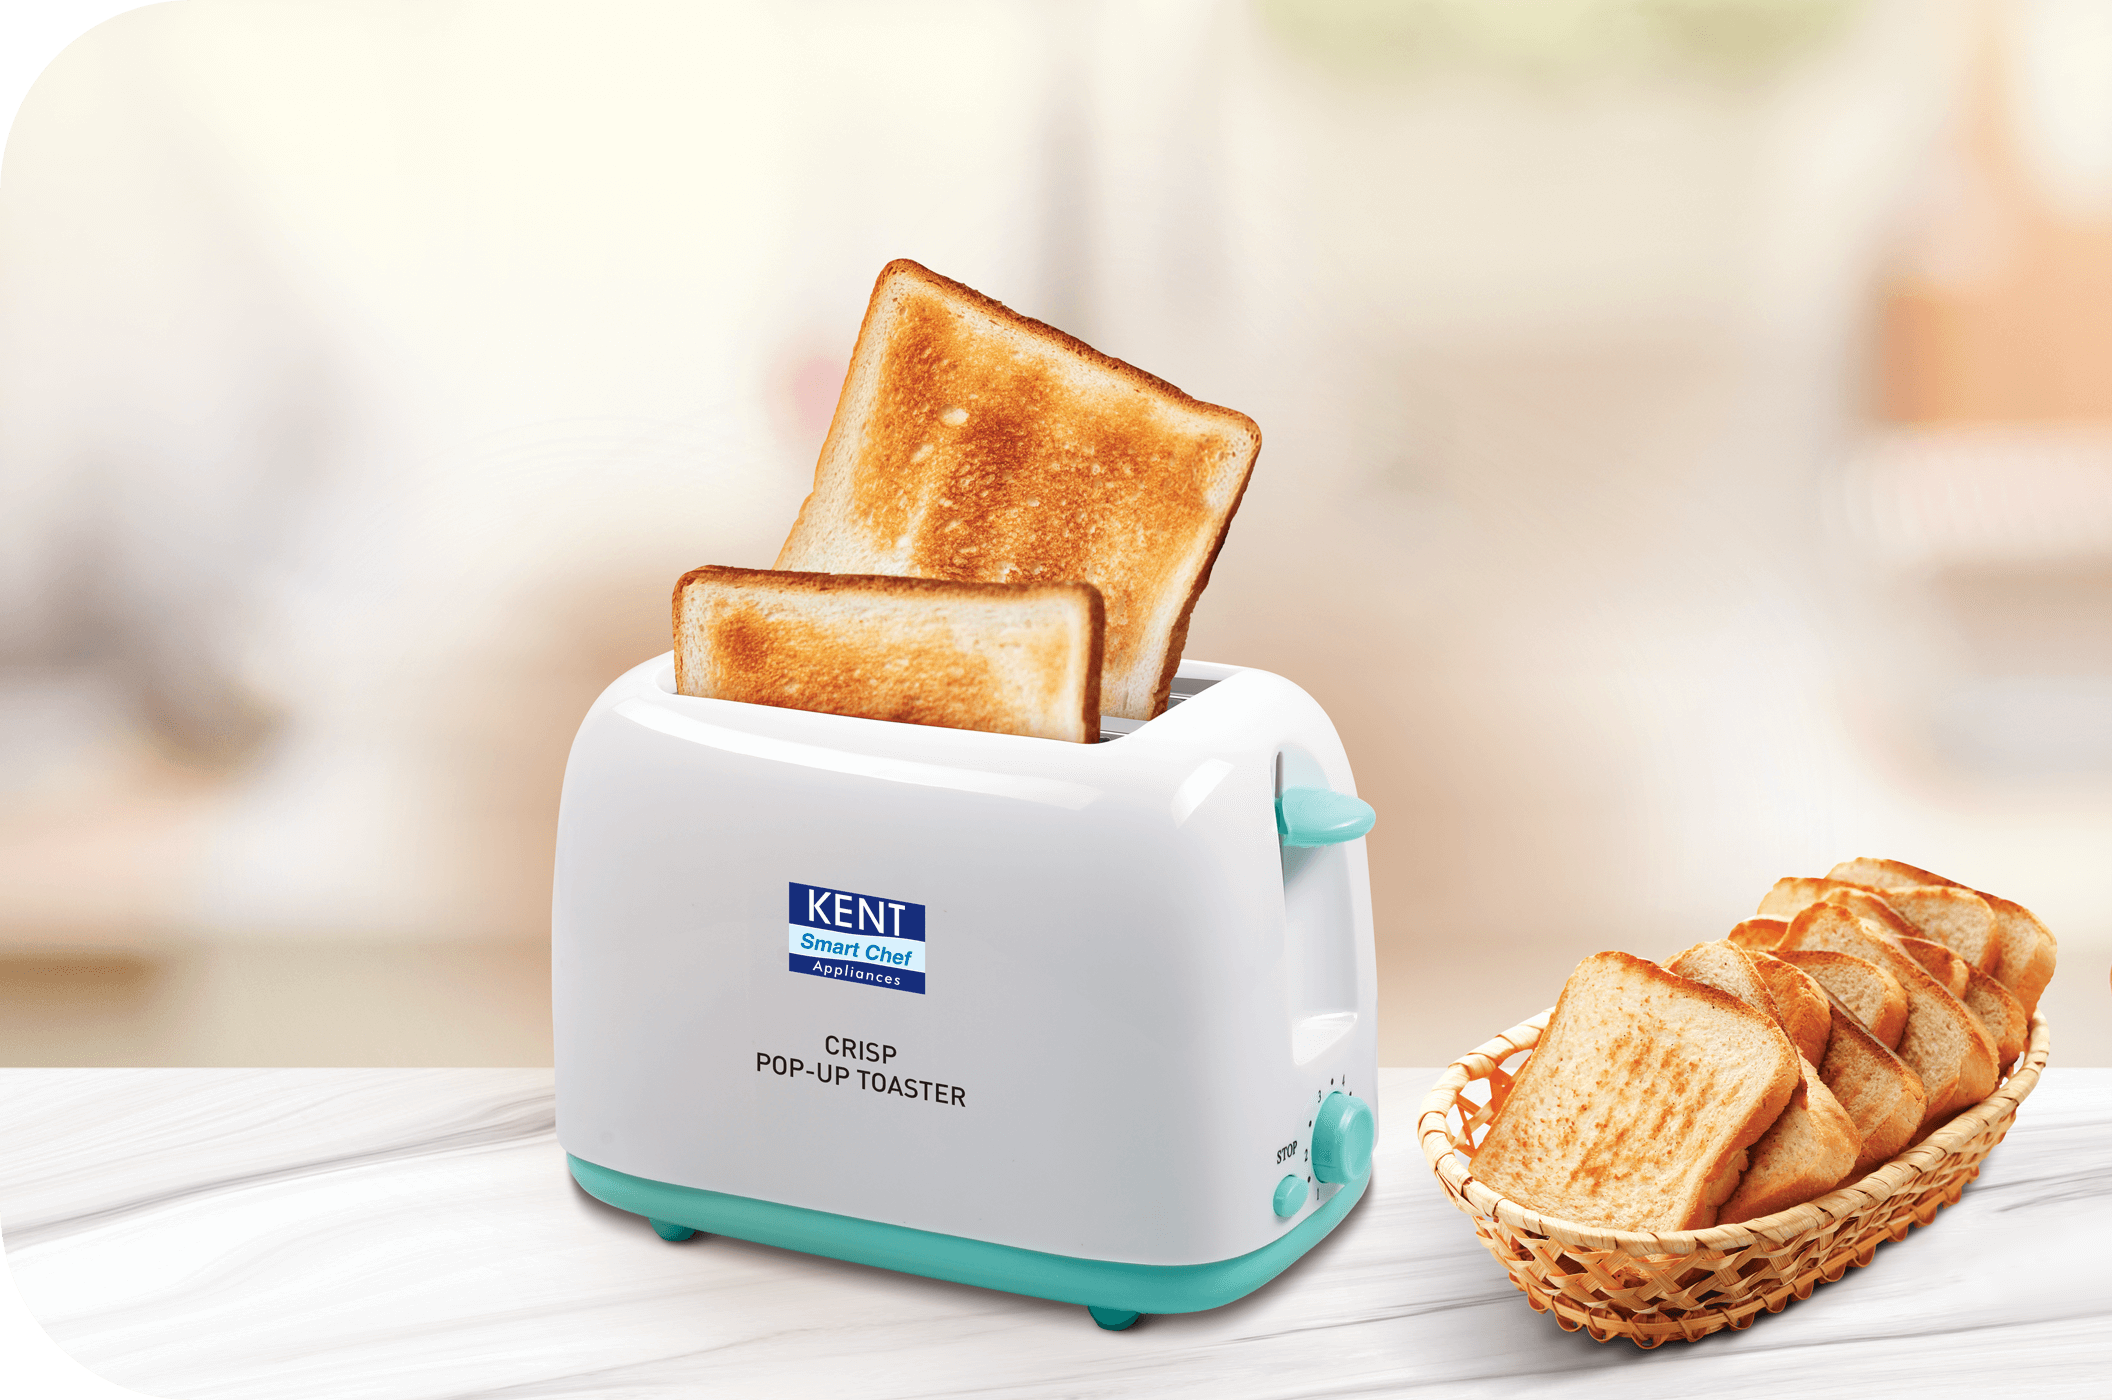 KENT Crisp Pop-Up Toaster